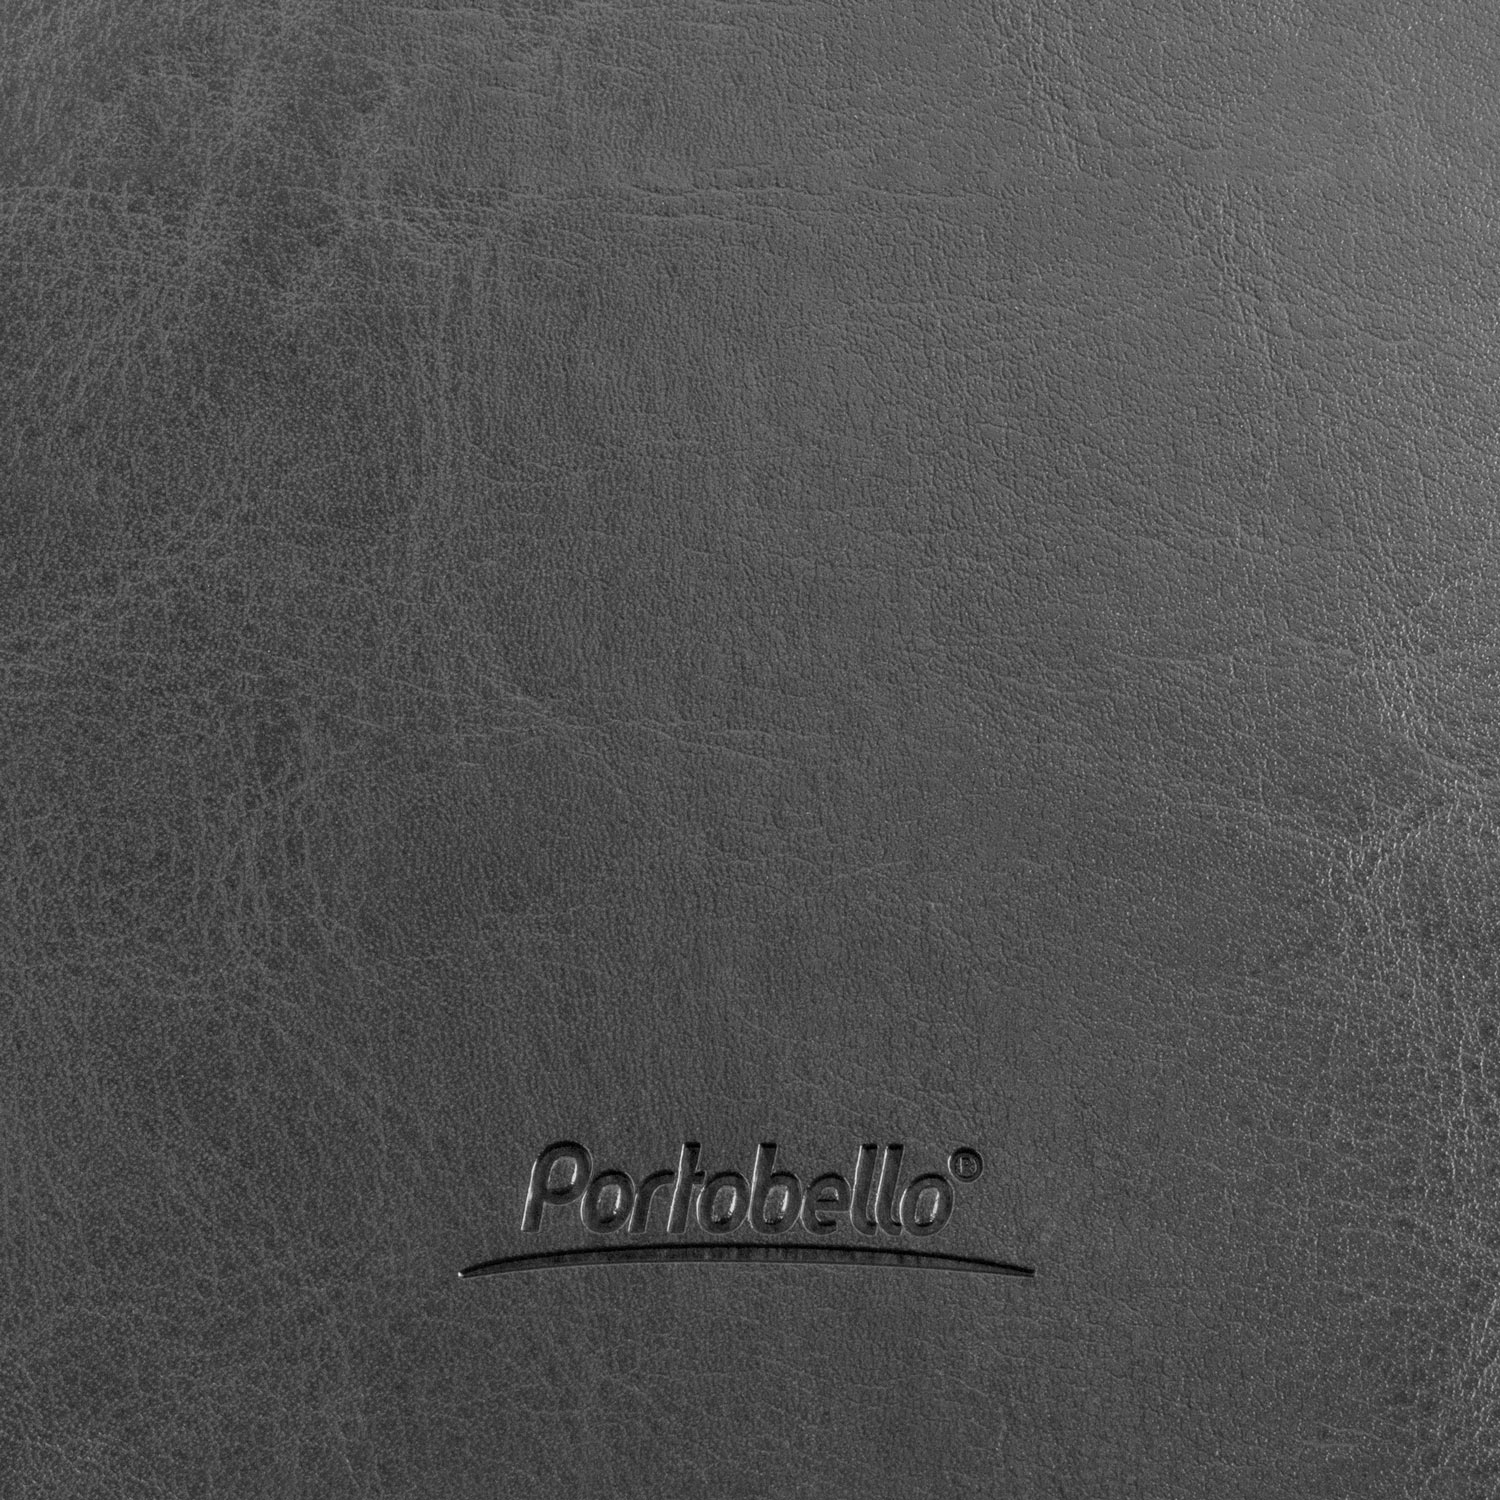 Блокнот Portobello Notebook Trend, River side slim, серый/красный